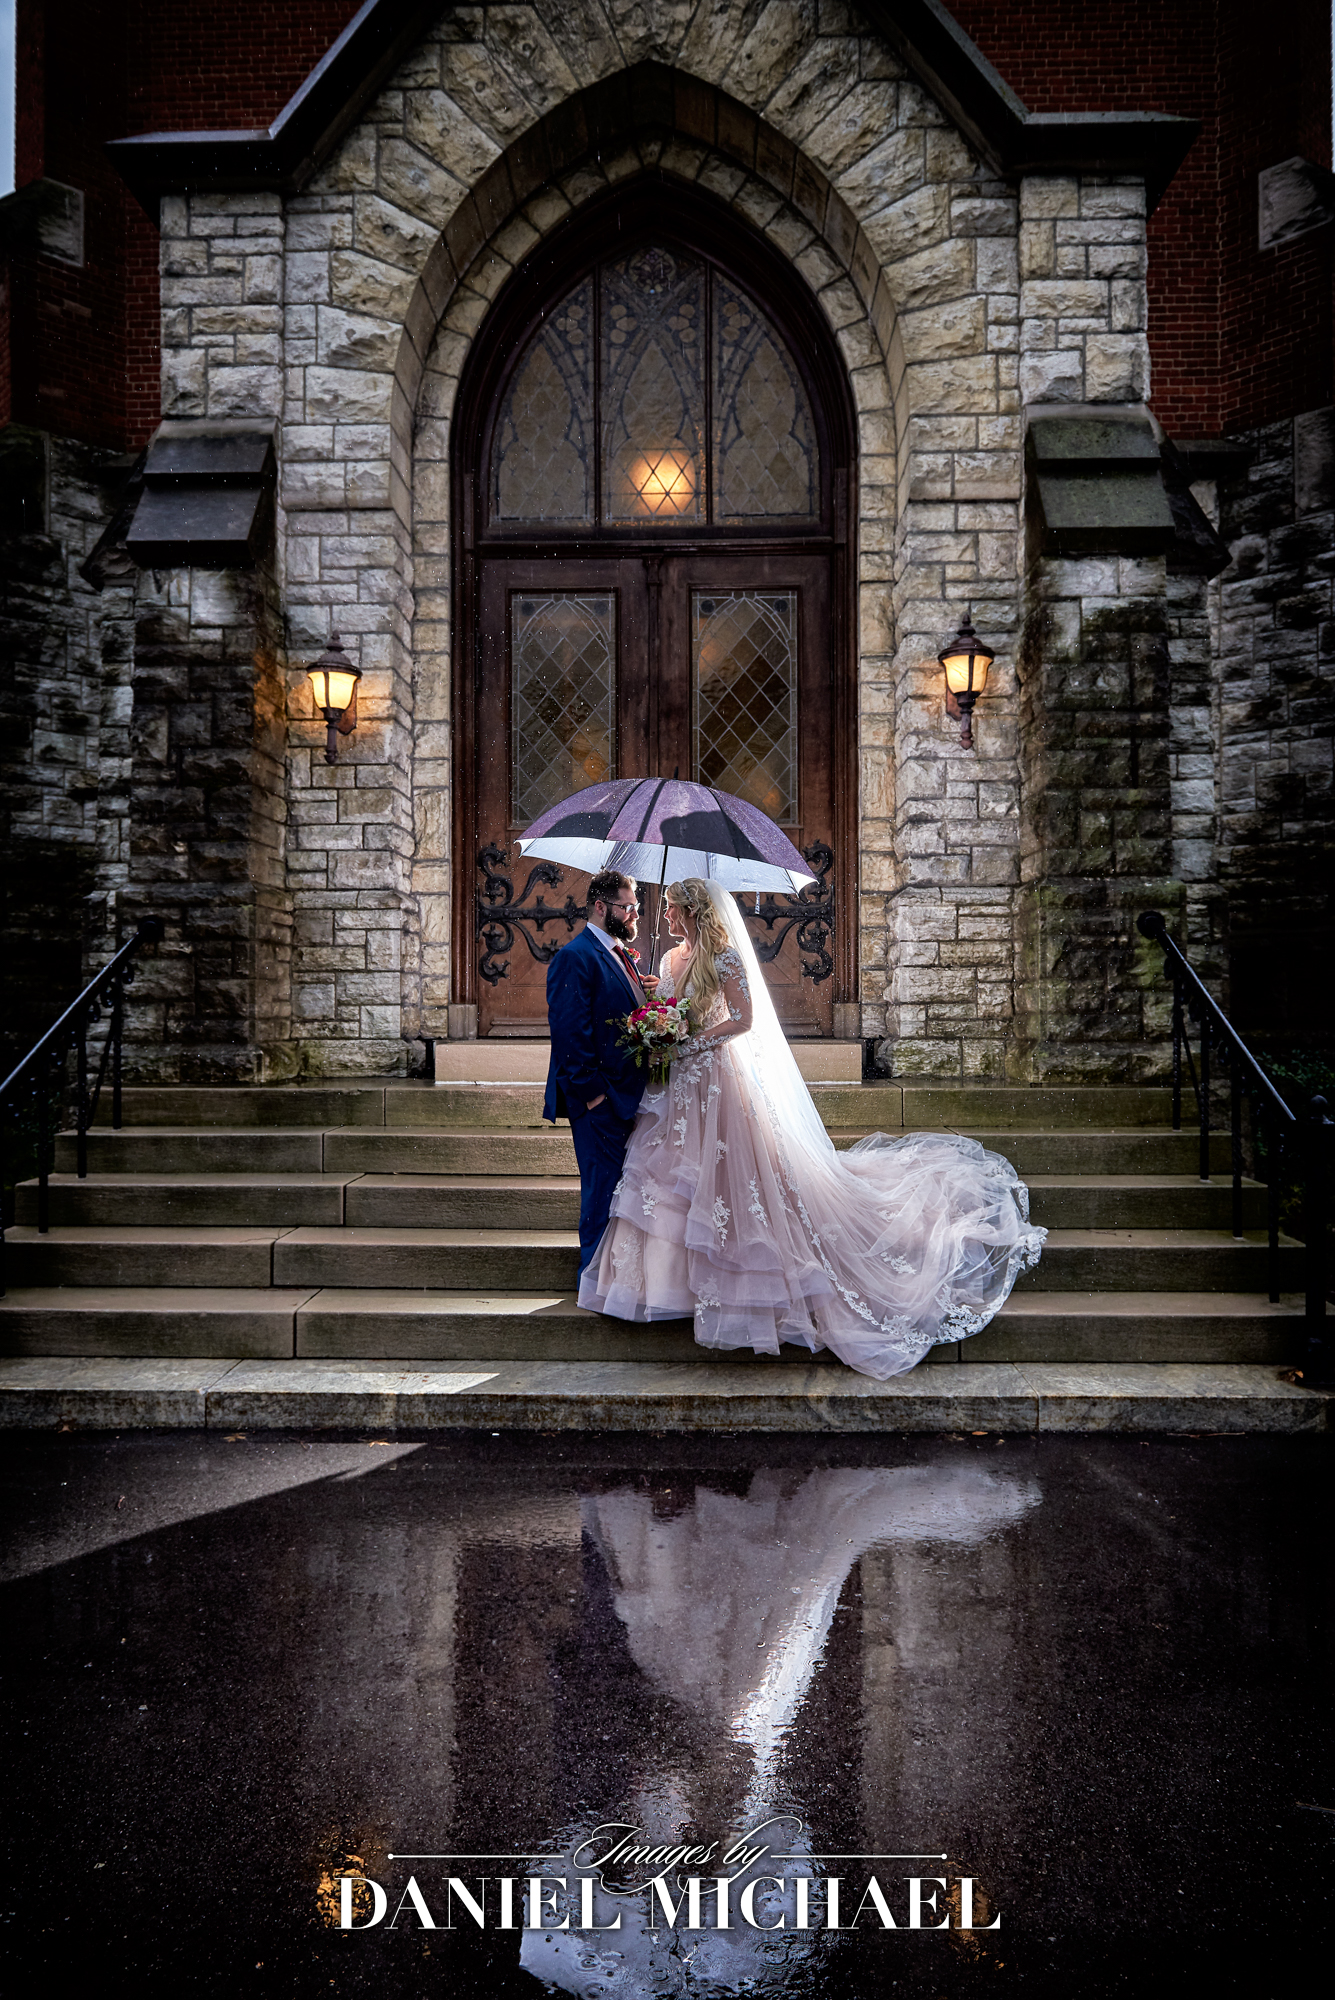 Wedding Photographer captures rainy photo with umbrella and reflection